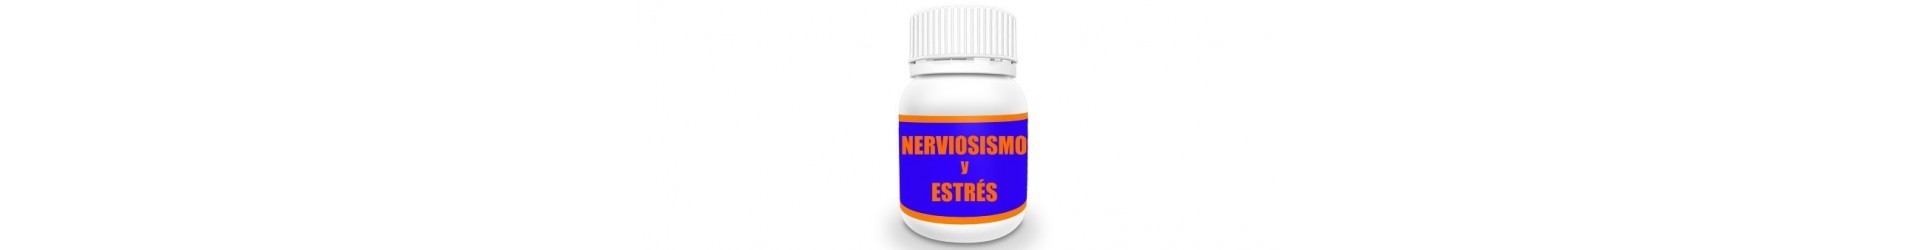 Nerviosismo y estrés - MundoHuella.com